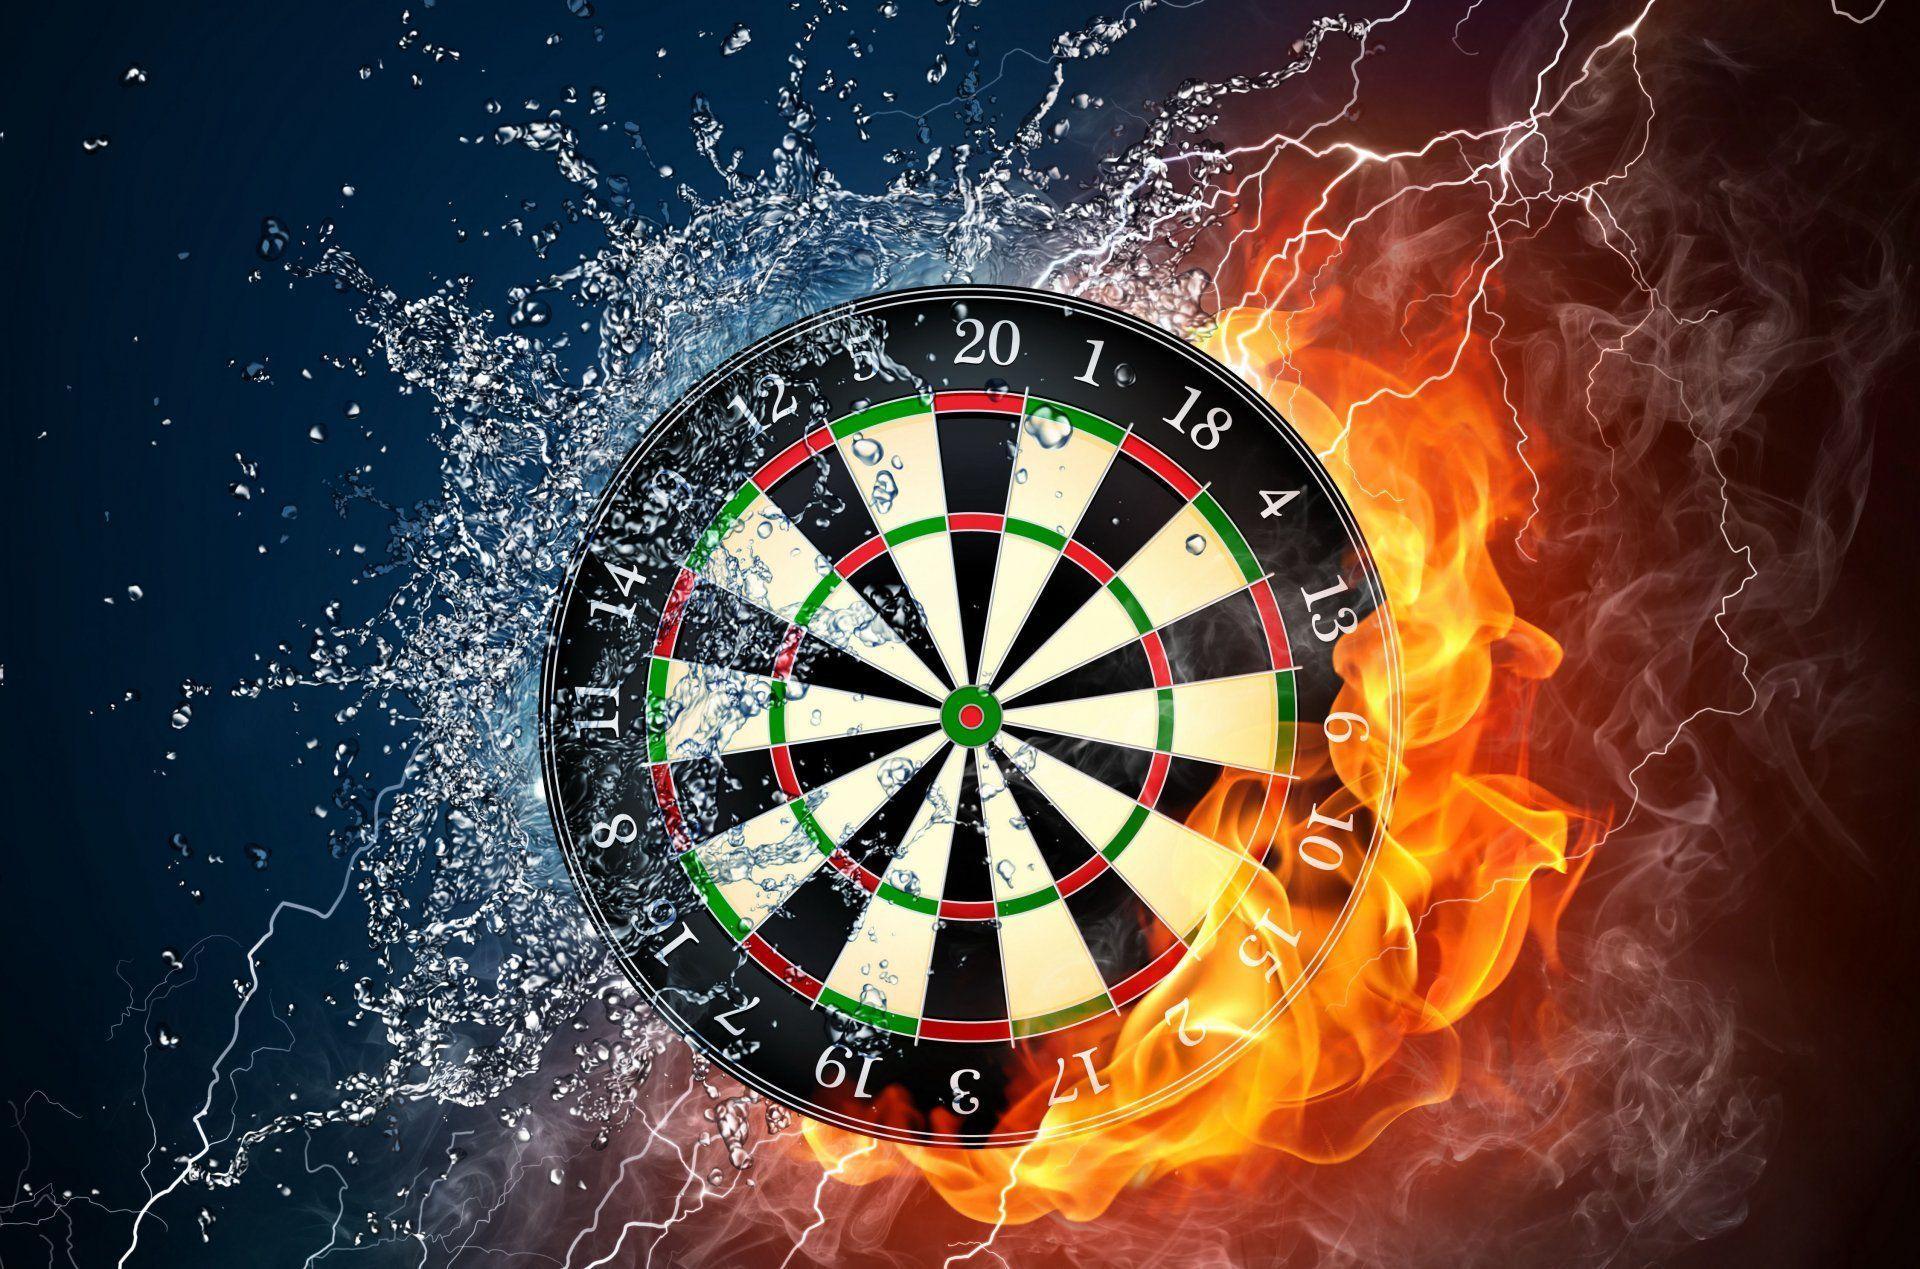 darts darts target fire water drops spray rank smoke flame force